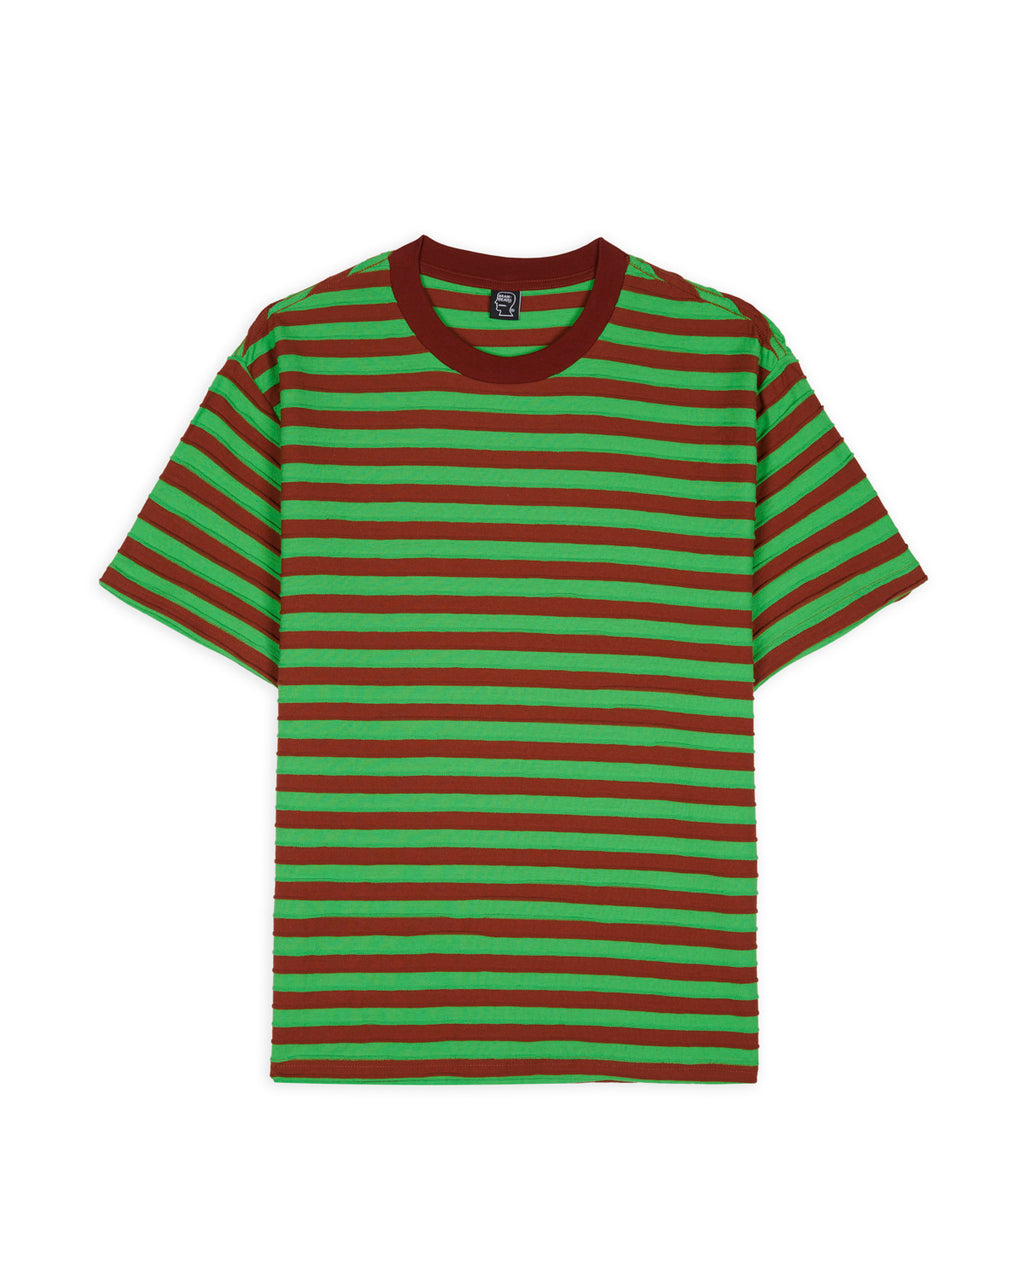 Denny Blaine Striped T-Shirt - Apple/Caramel 1